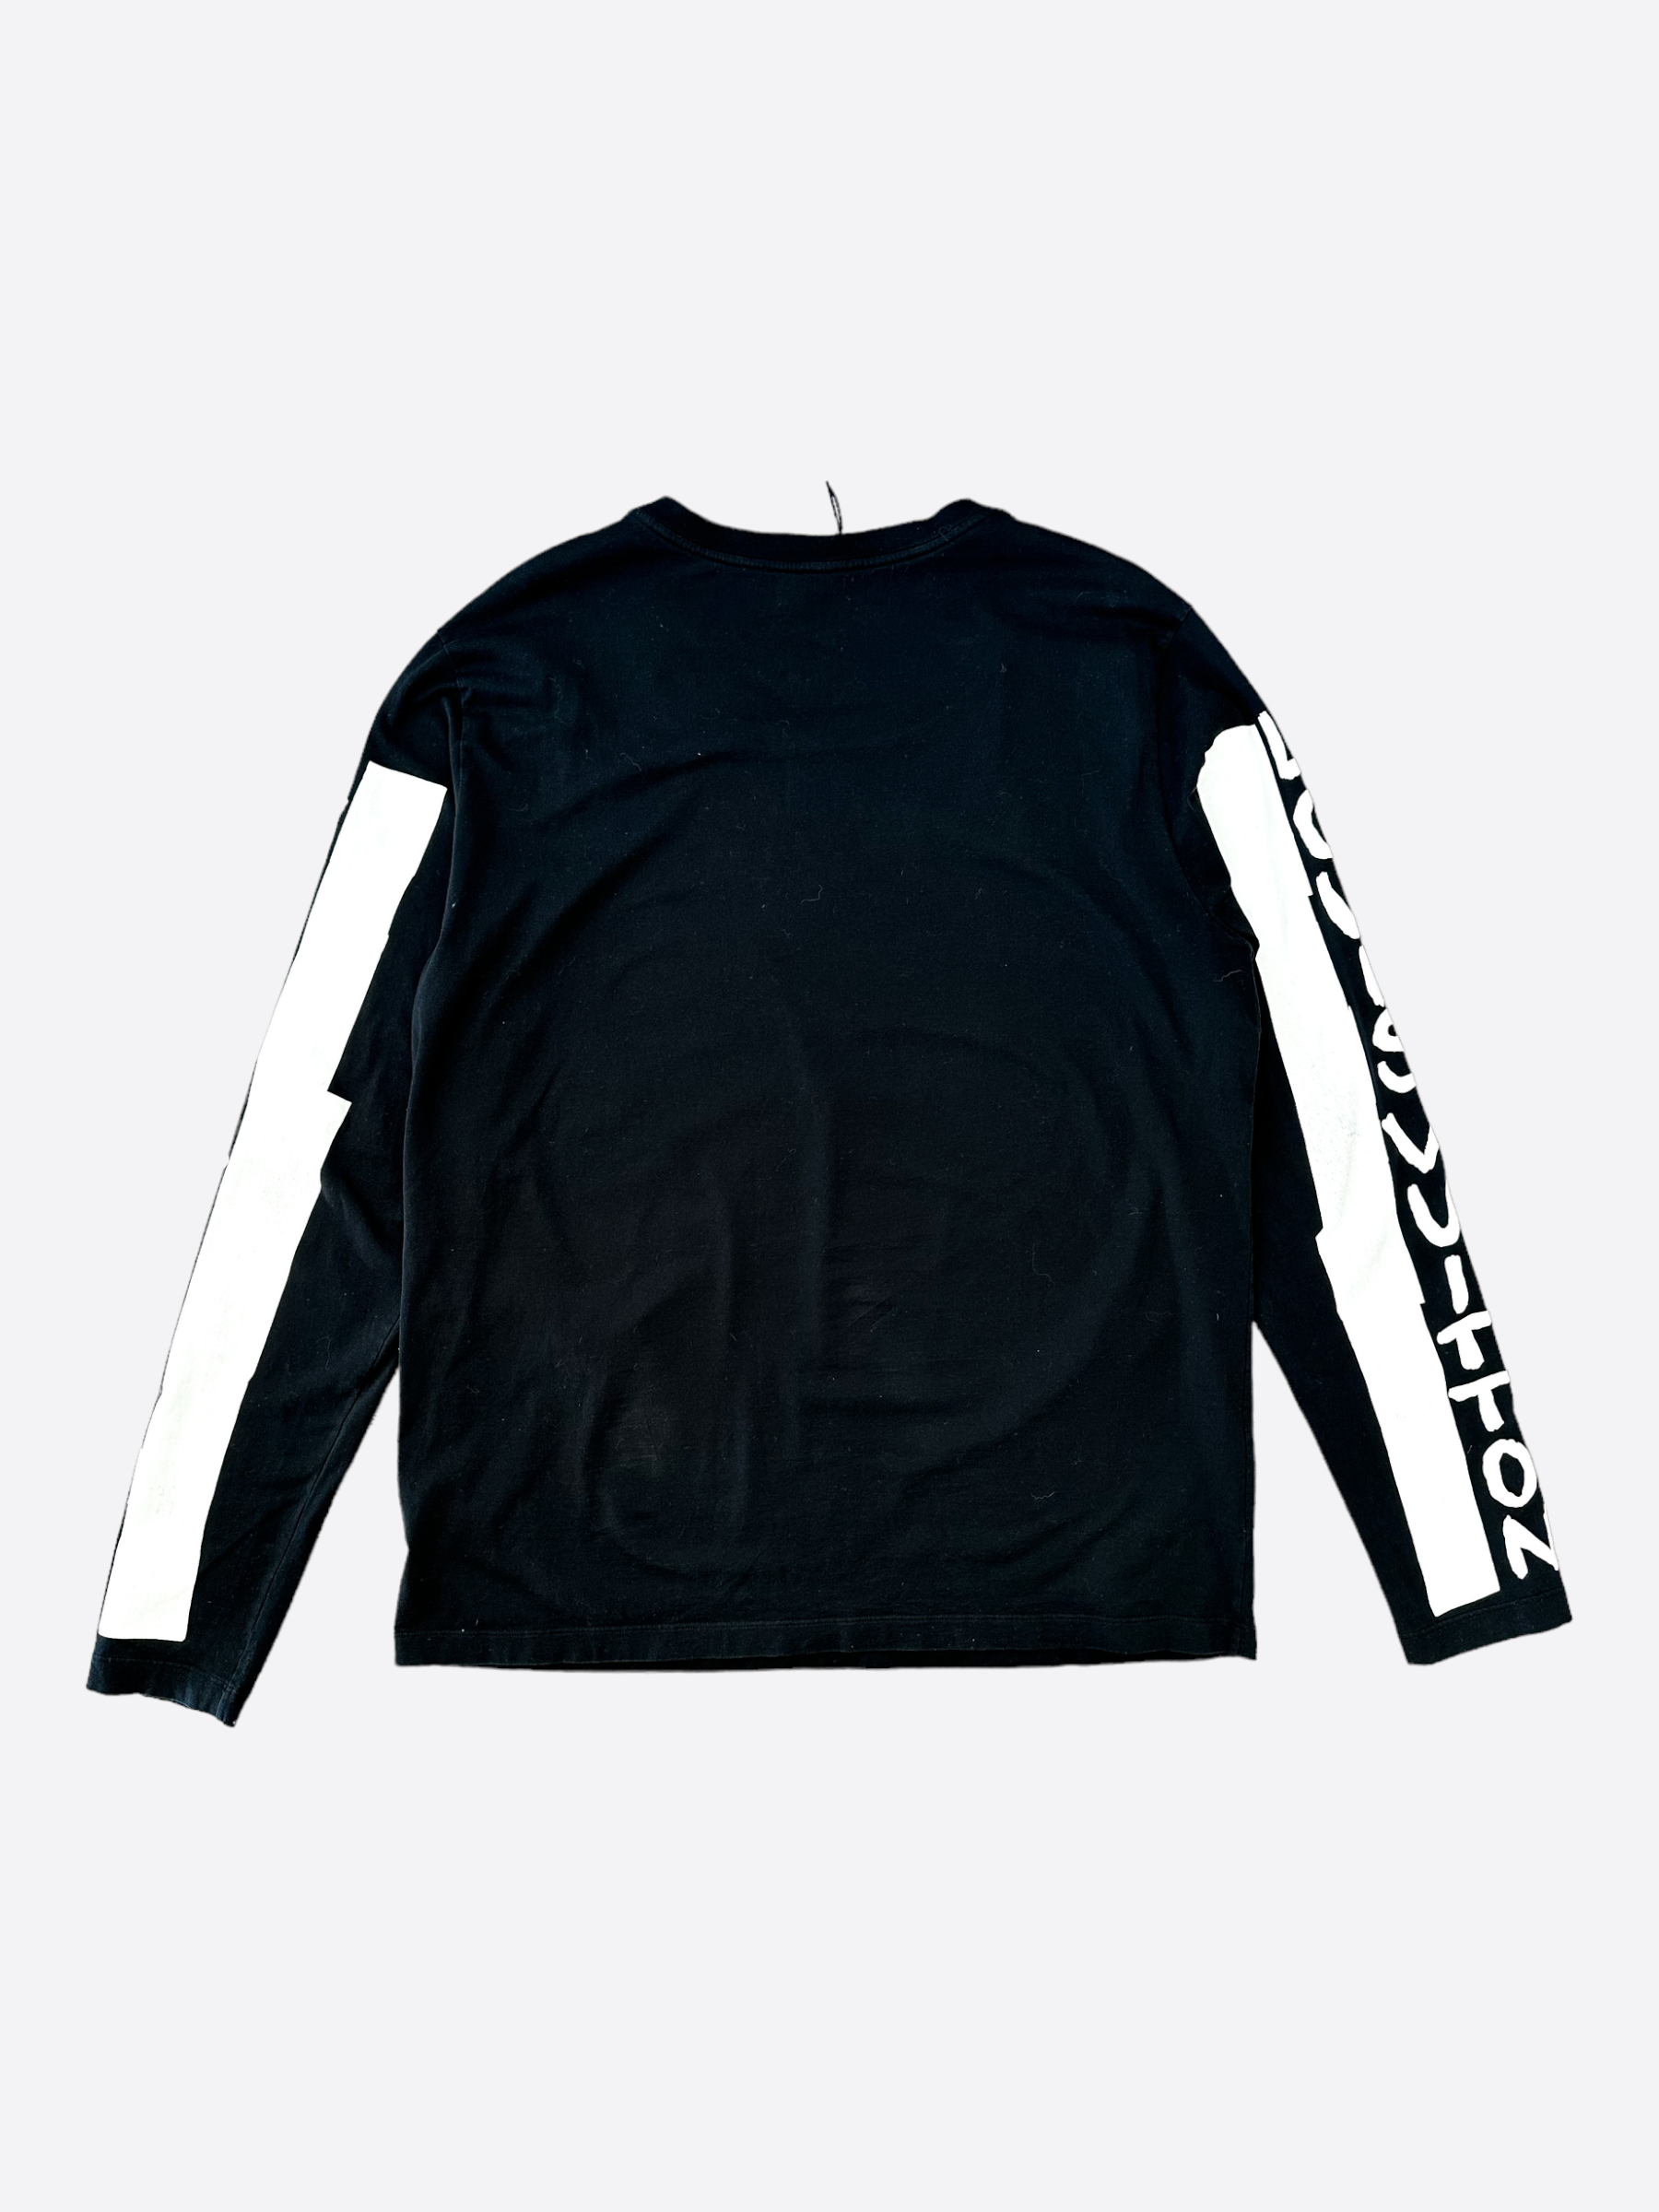 Louis Vuitton Black Striped Longsleeve T-Shirt